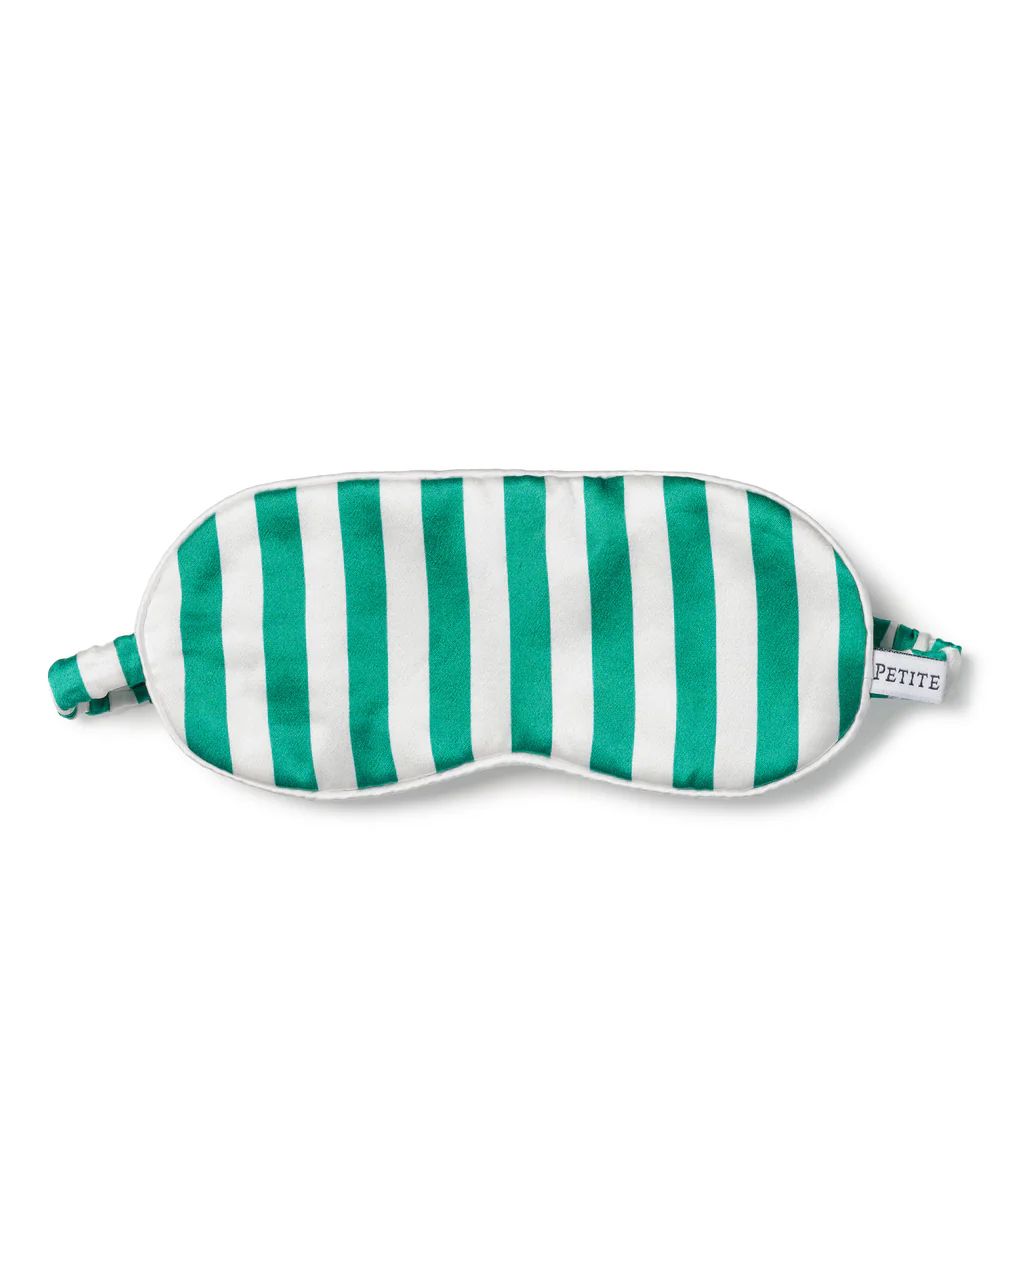 Adult's Silk Sleep Mask in Green Stripe | Petite Plume